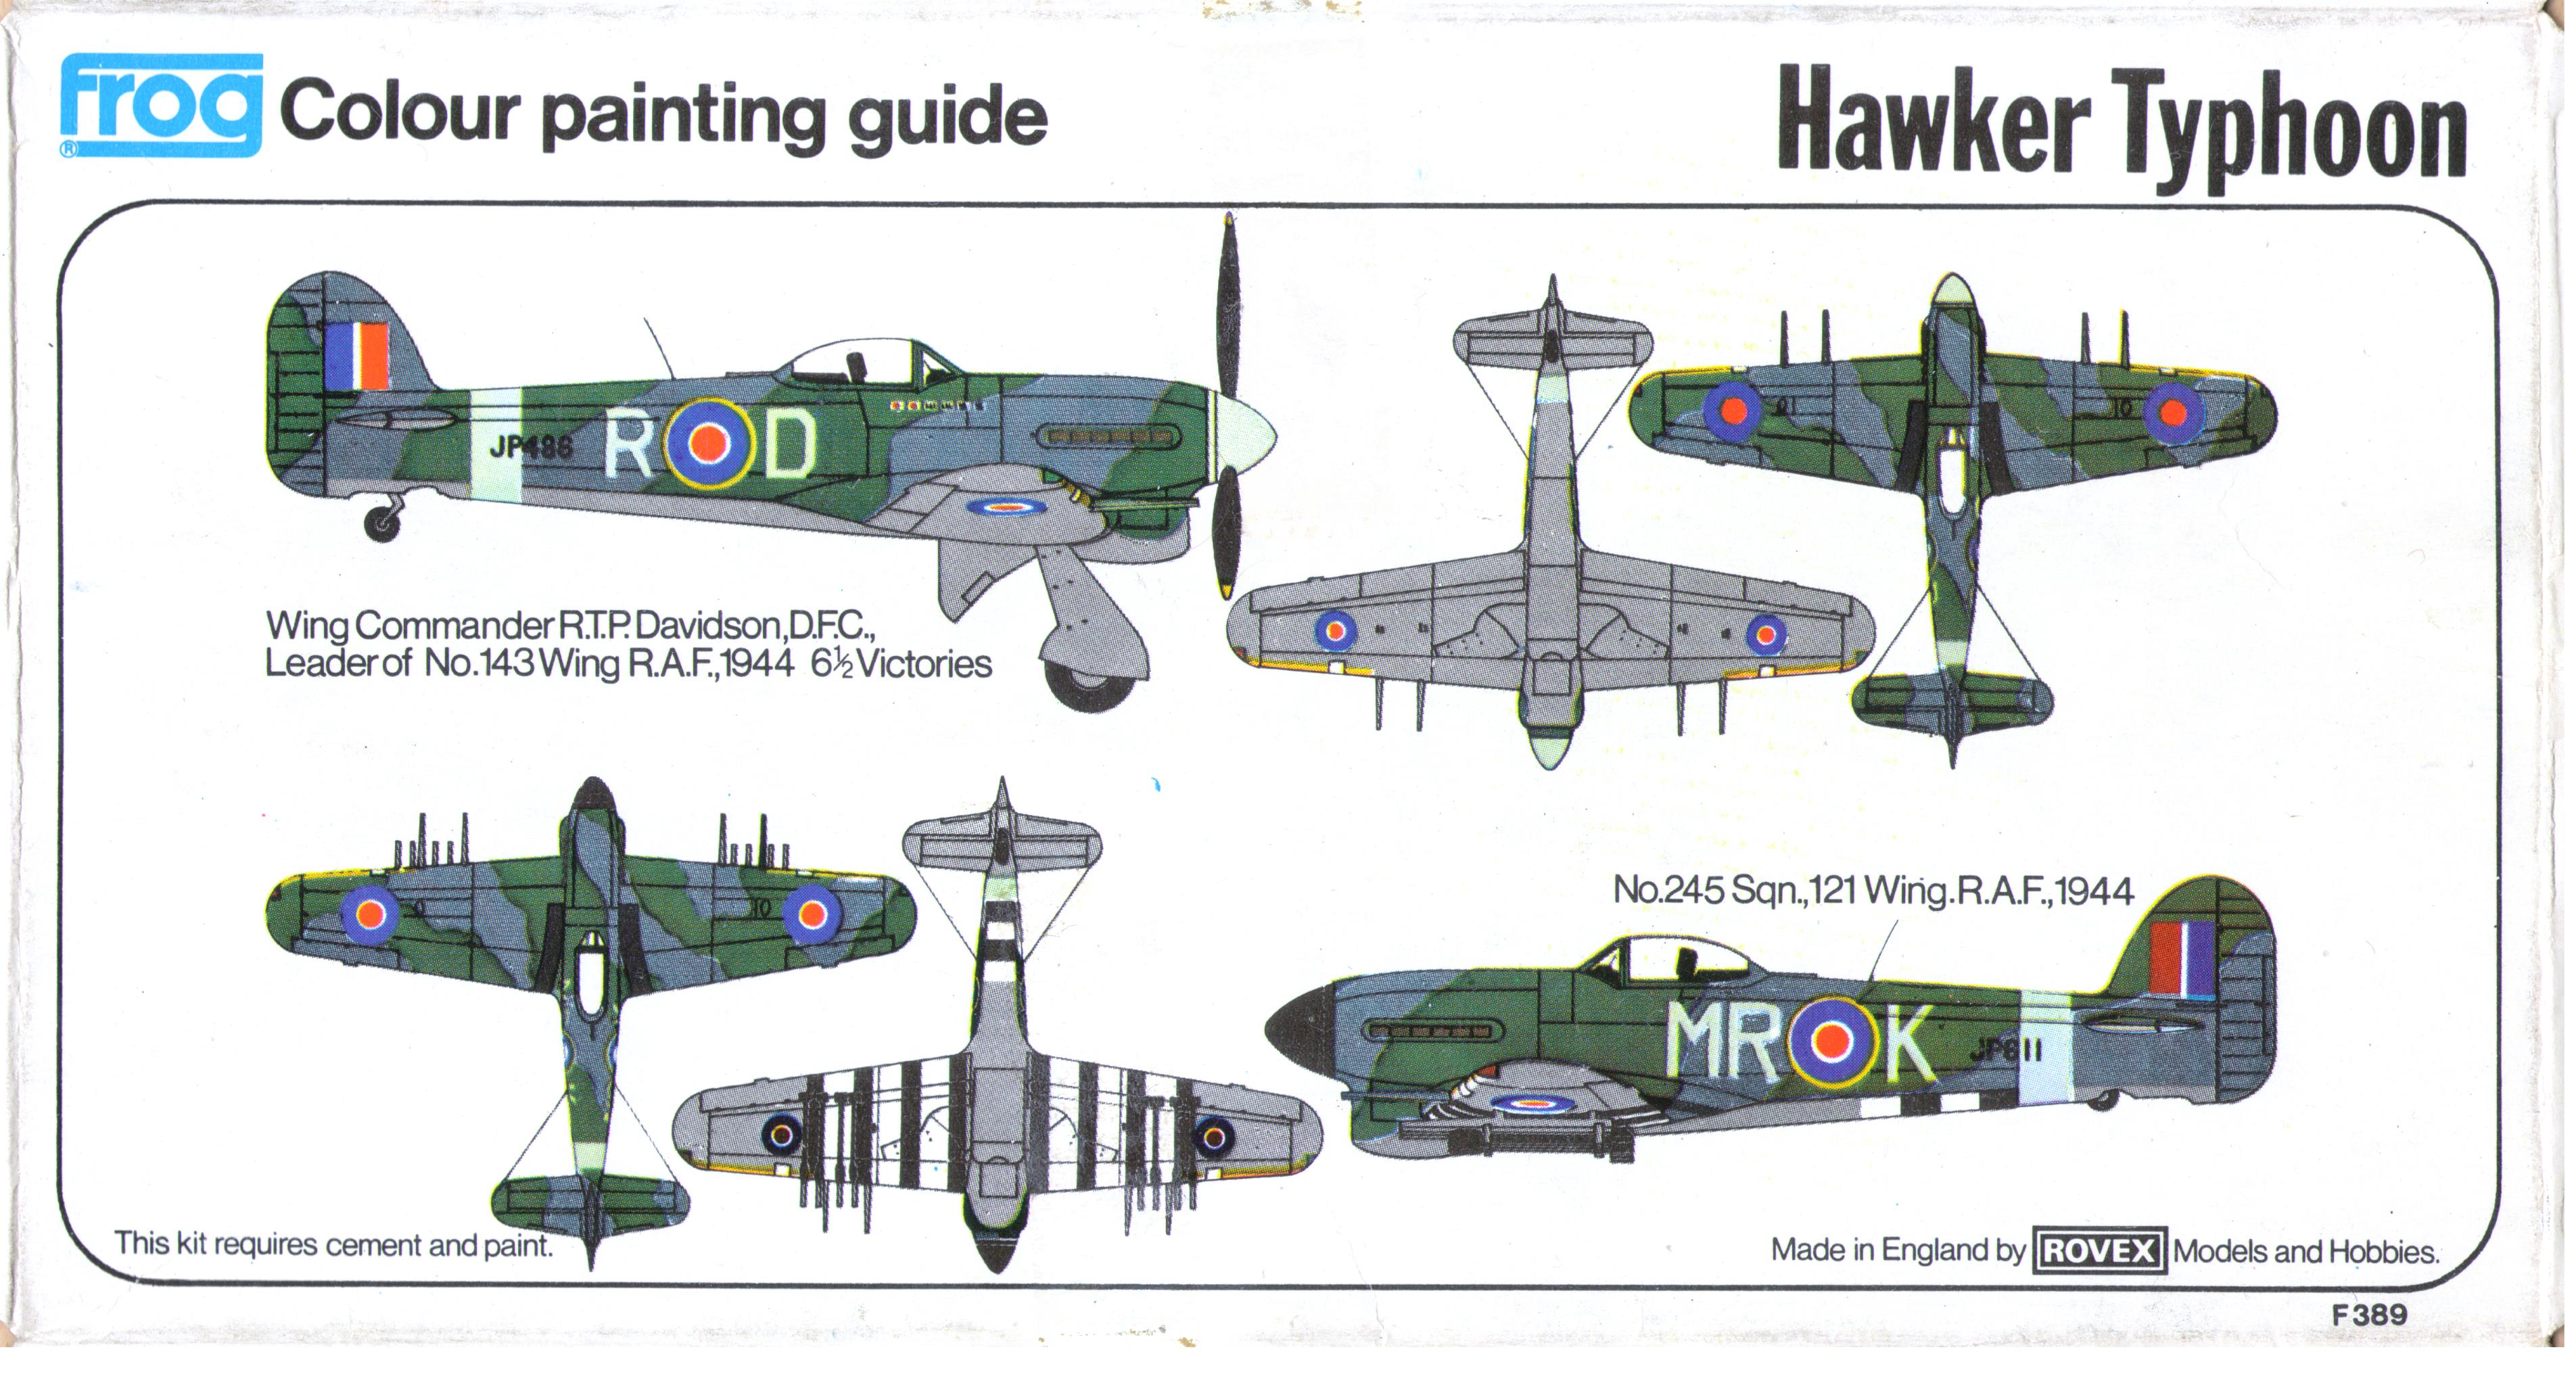 Верх коробки FROG F389 Blue series Hawker Typhoon, Rovex Models & Hobbies, 1974-76